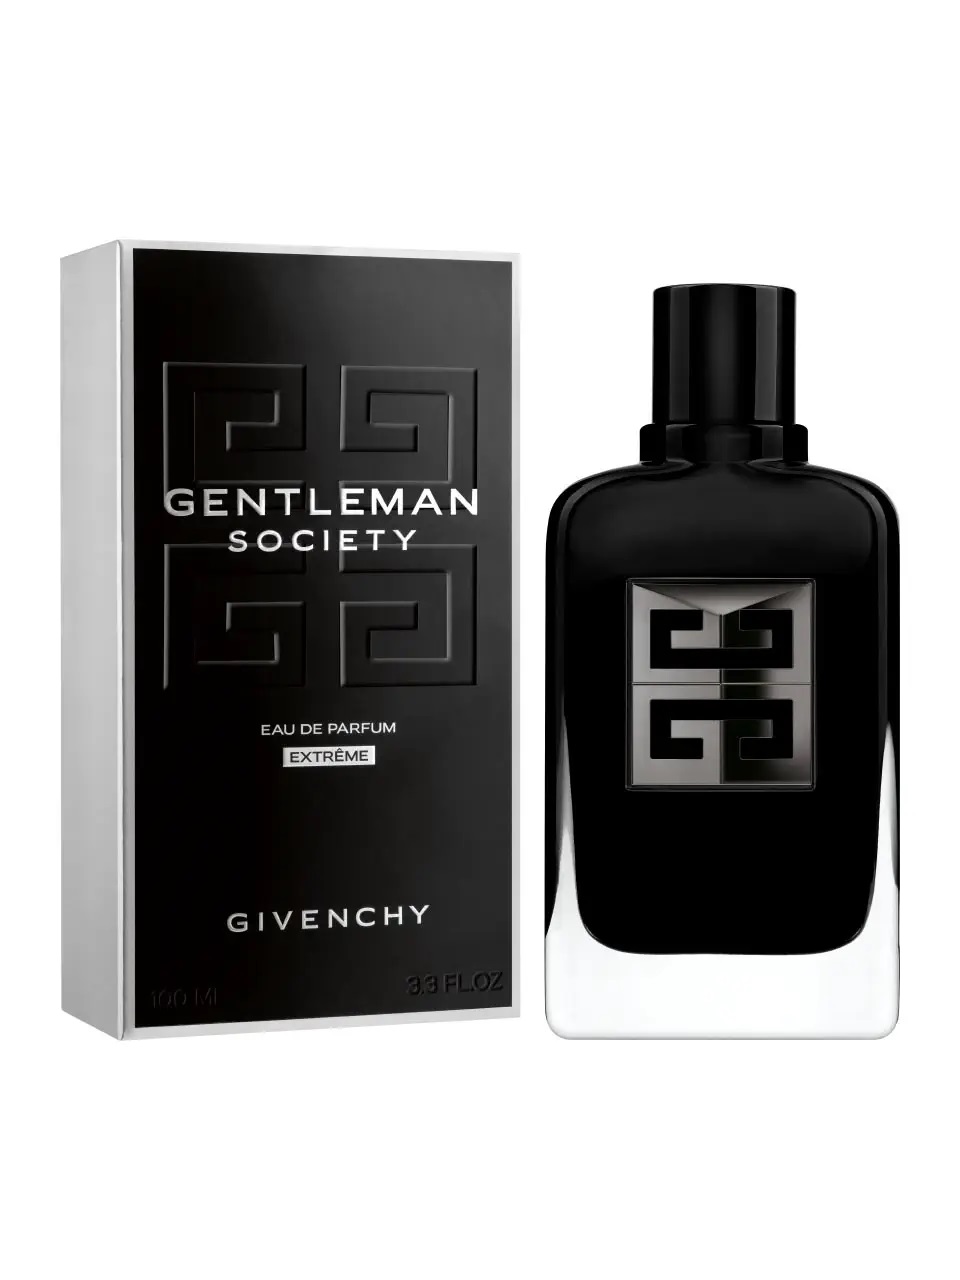 Givenchy Gentleman Society Eau de Parfum Extreme 100 ml